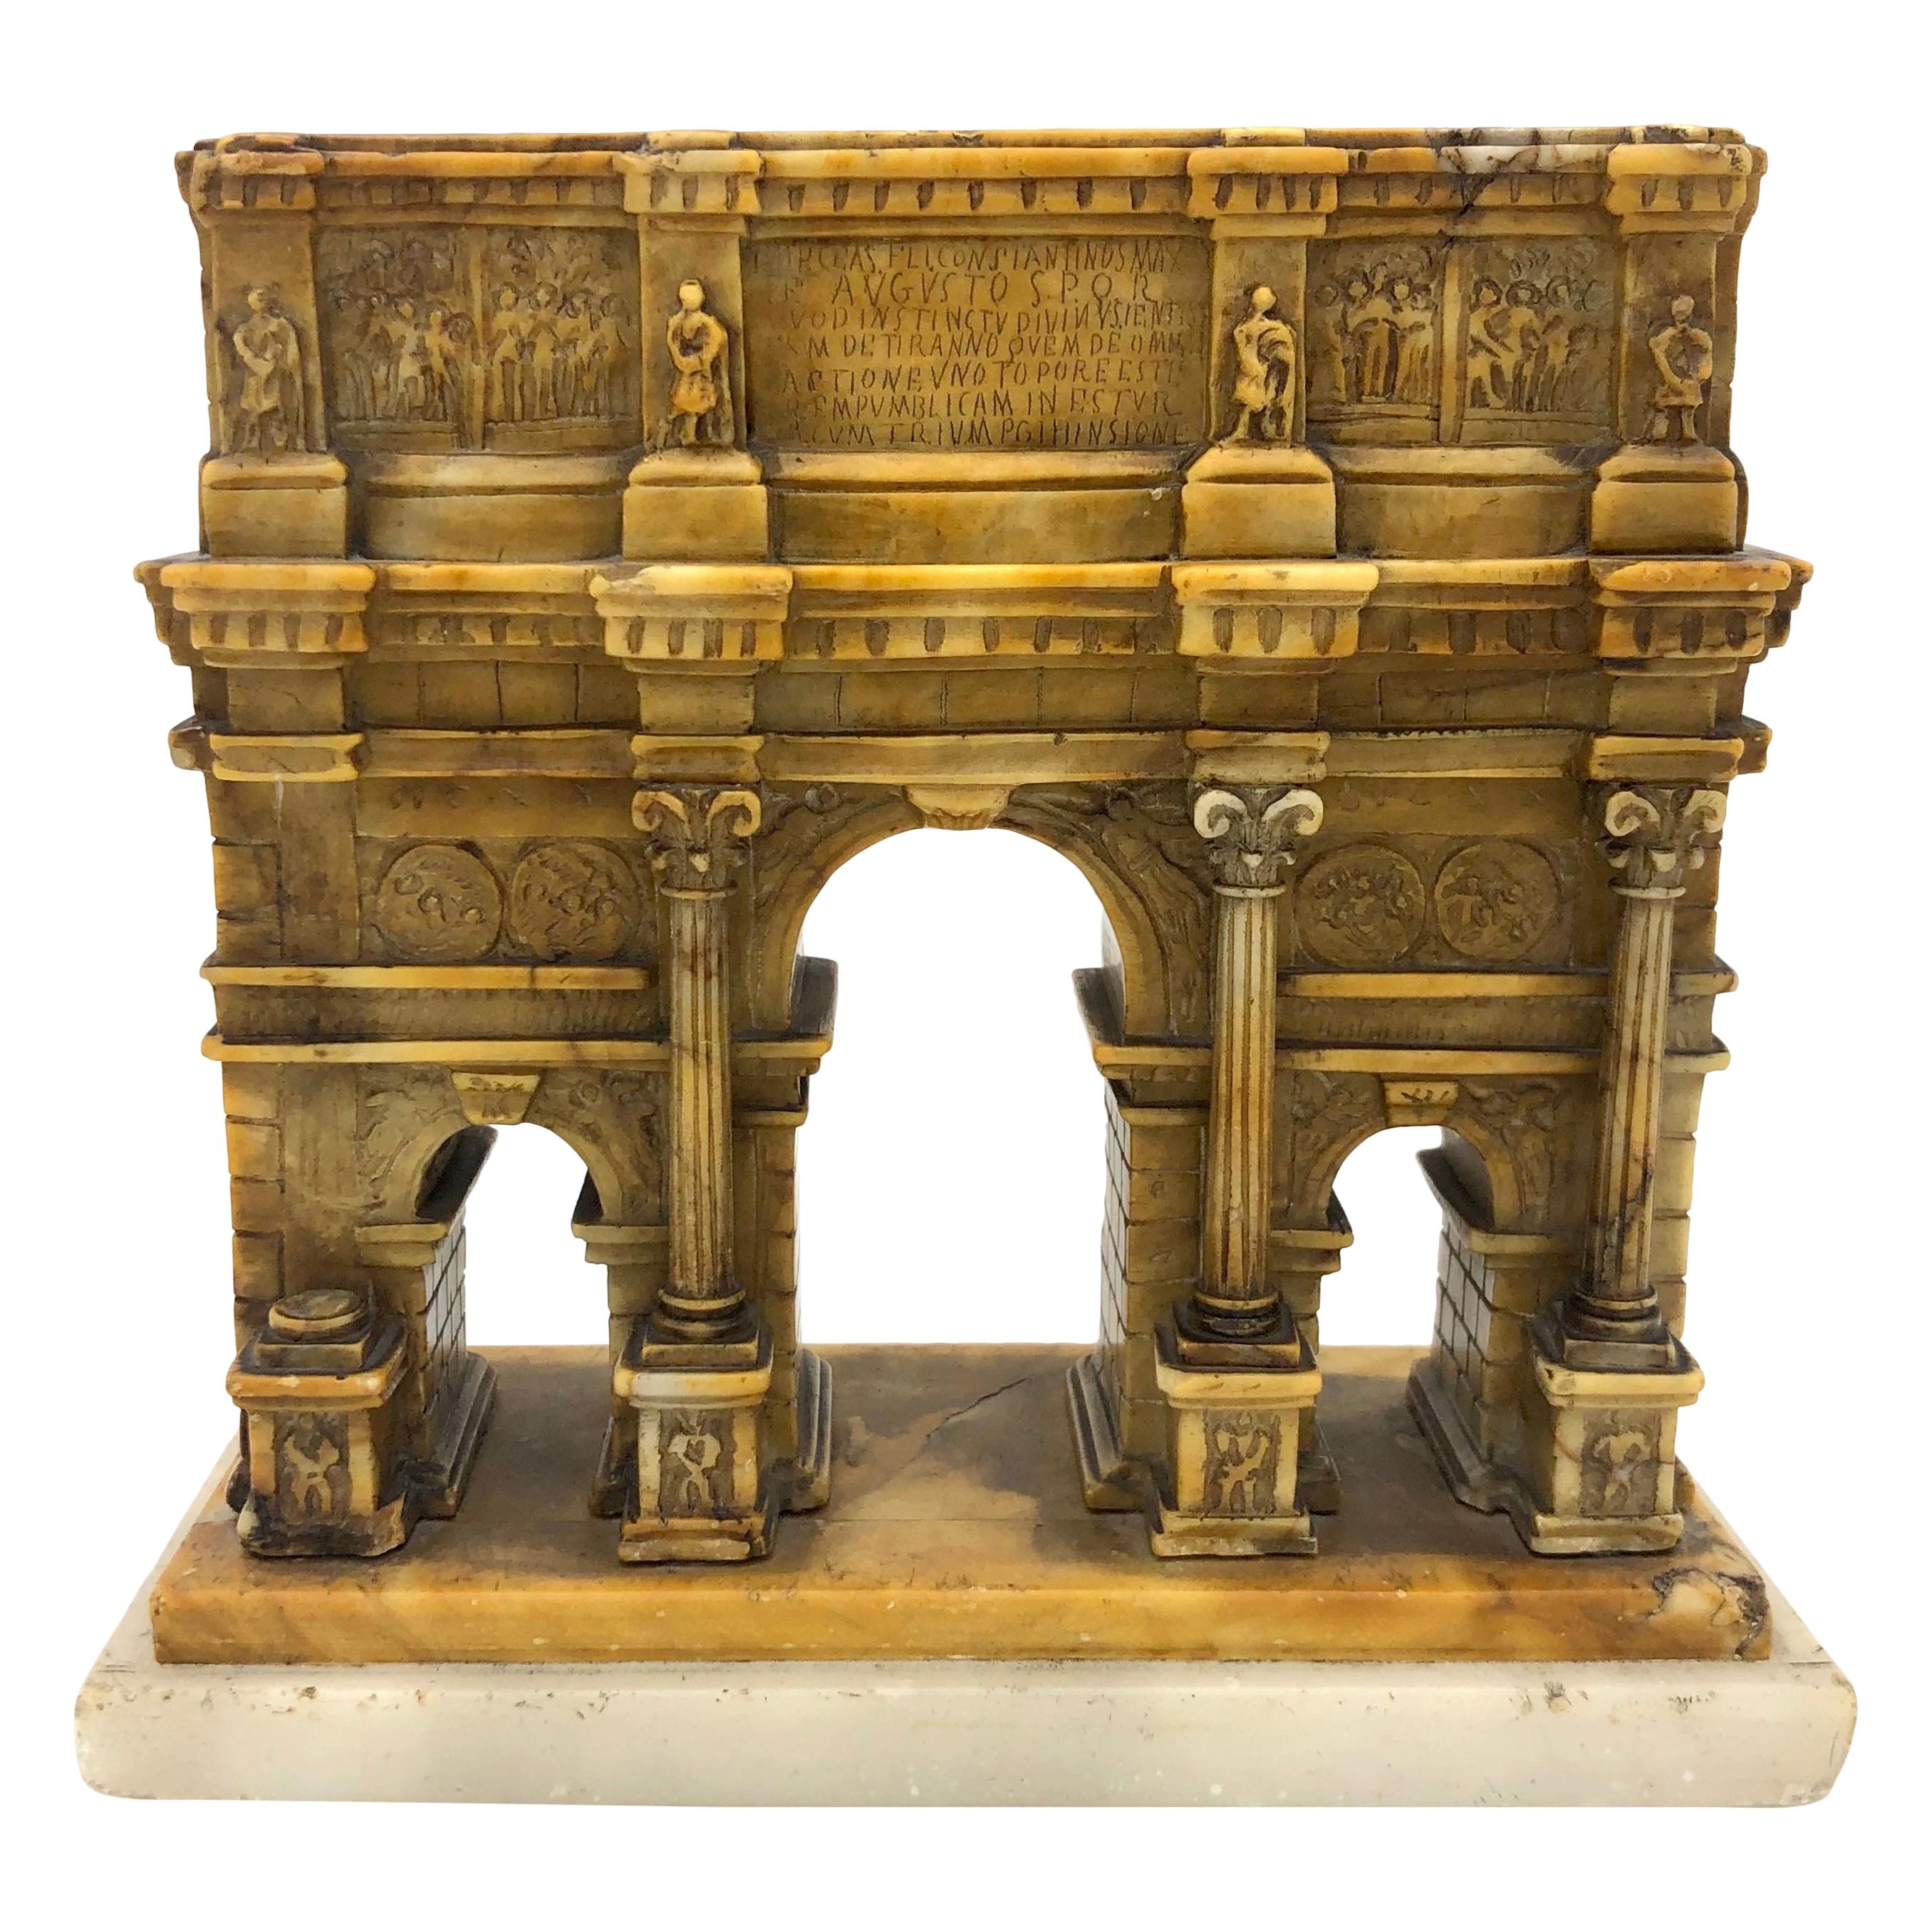 Antique Grand Tour Arch of Constantine's Triumph Miniature Architecture Model